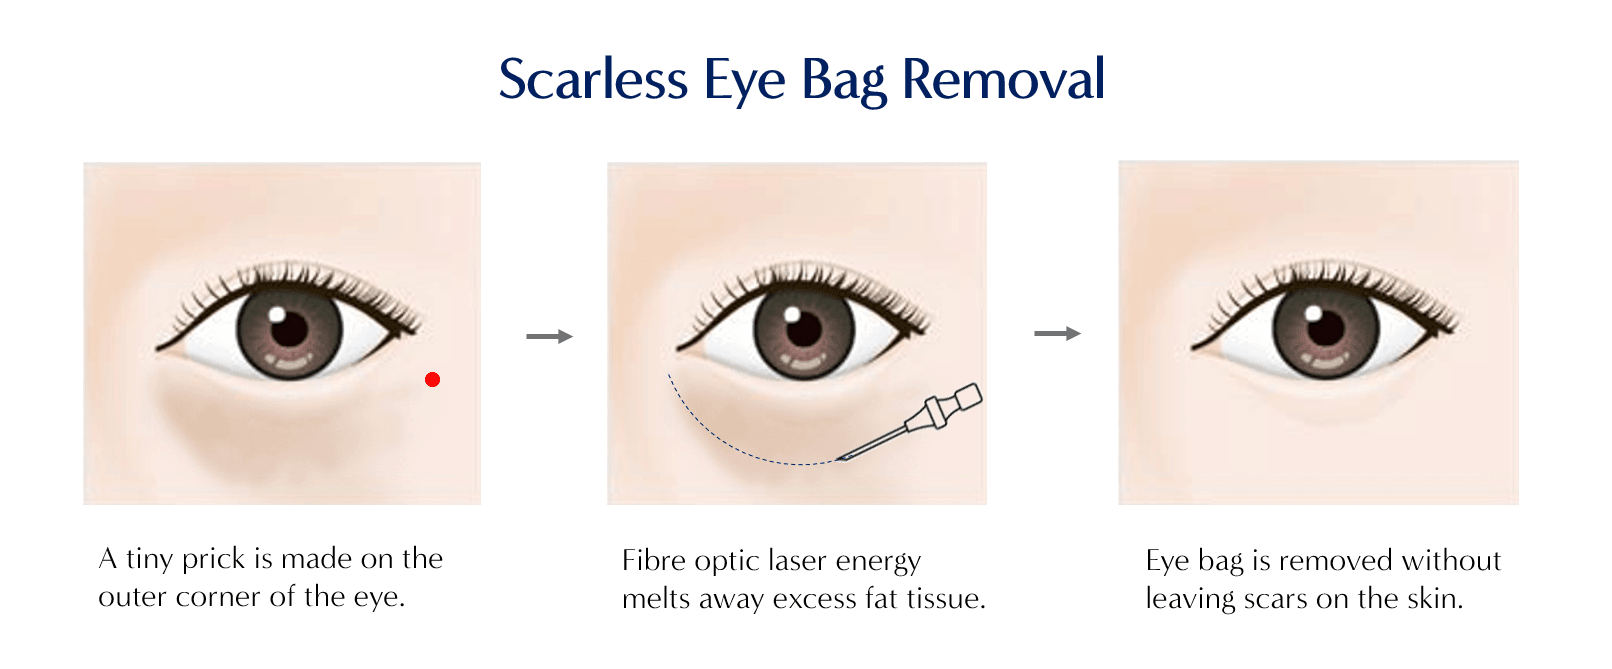 scarless eye bag removal procedure steps - dream plastic surgery singapore